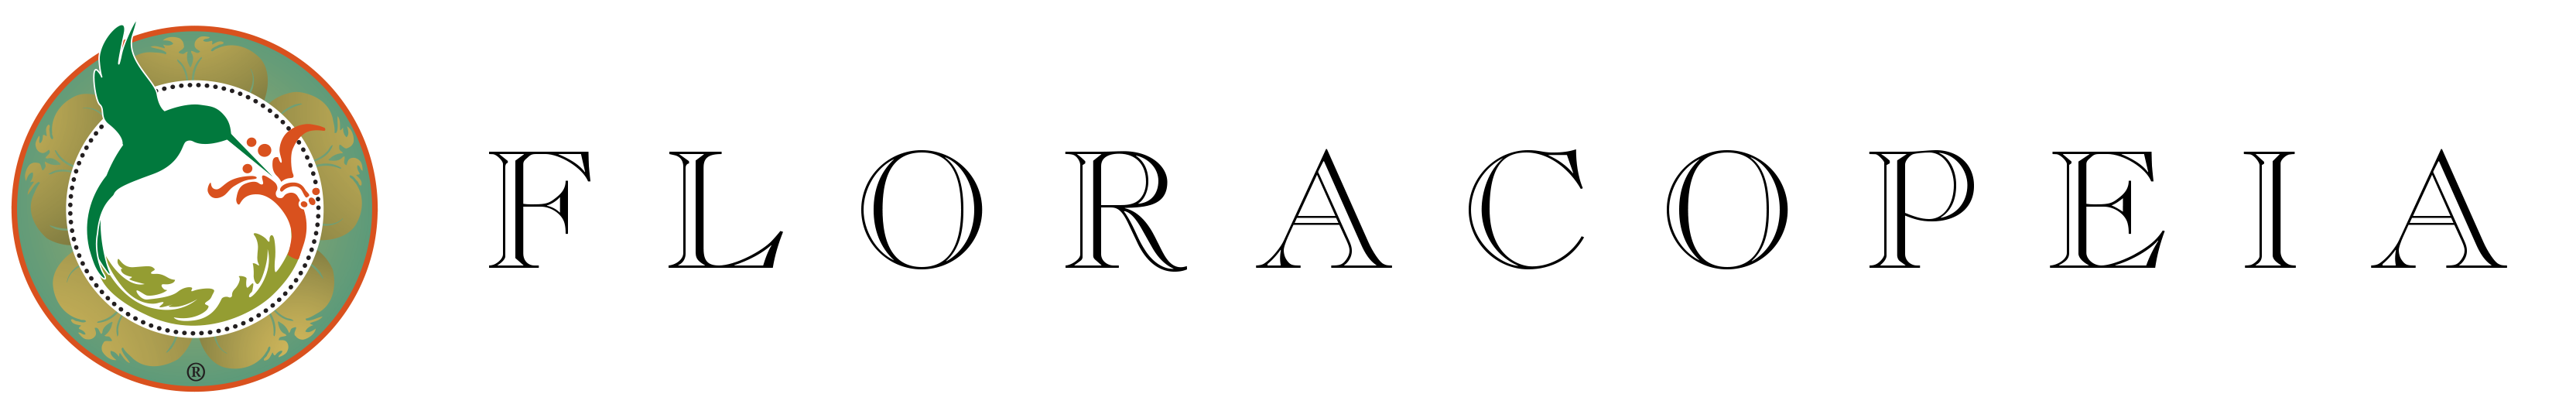 Floracopeia Logo 2017-1